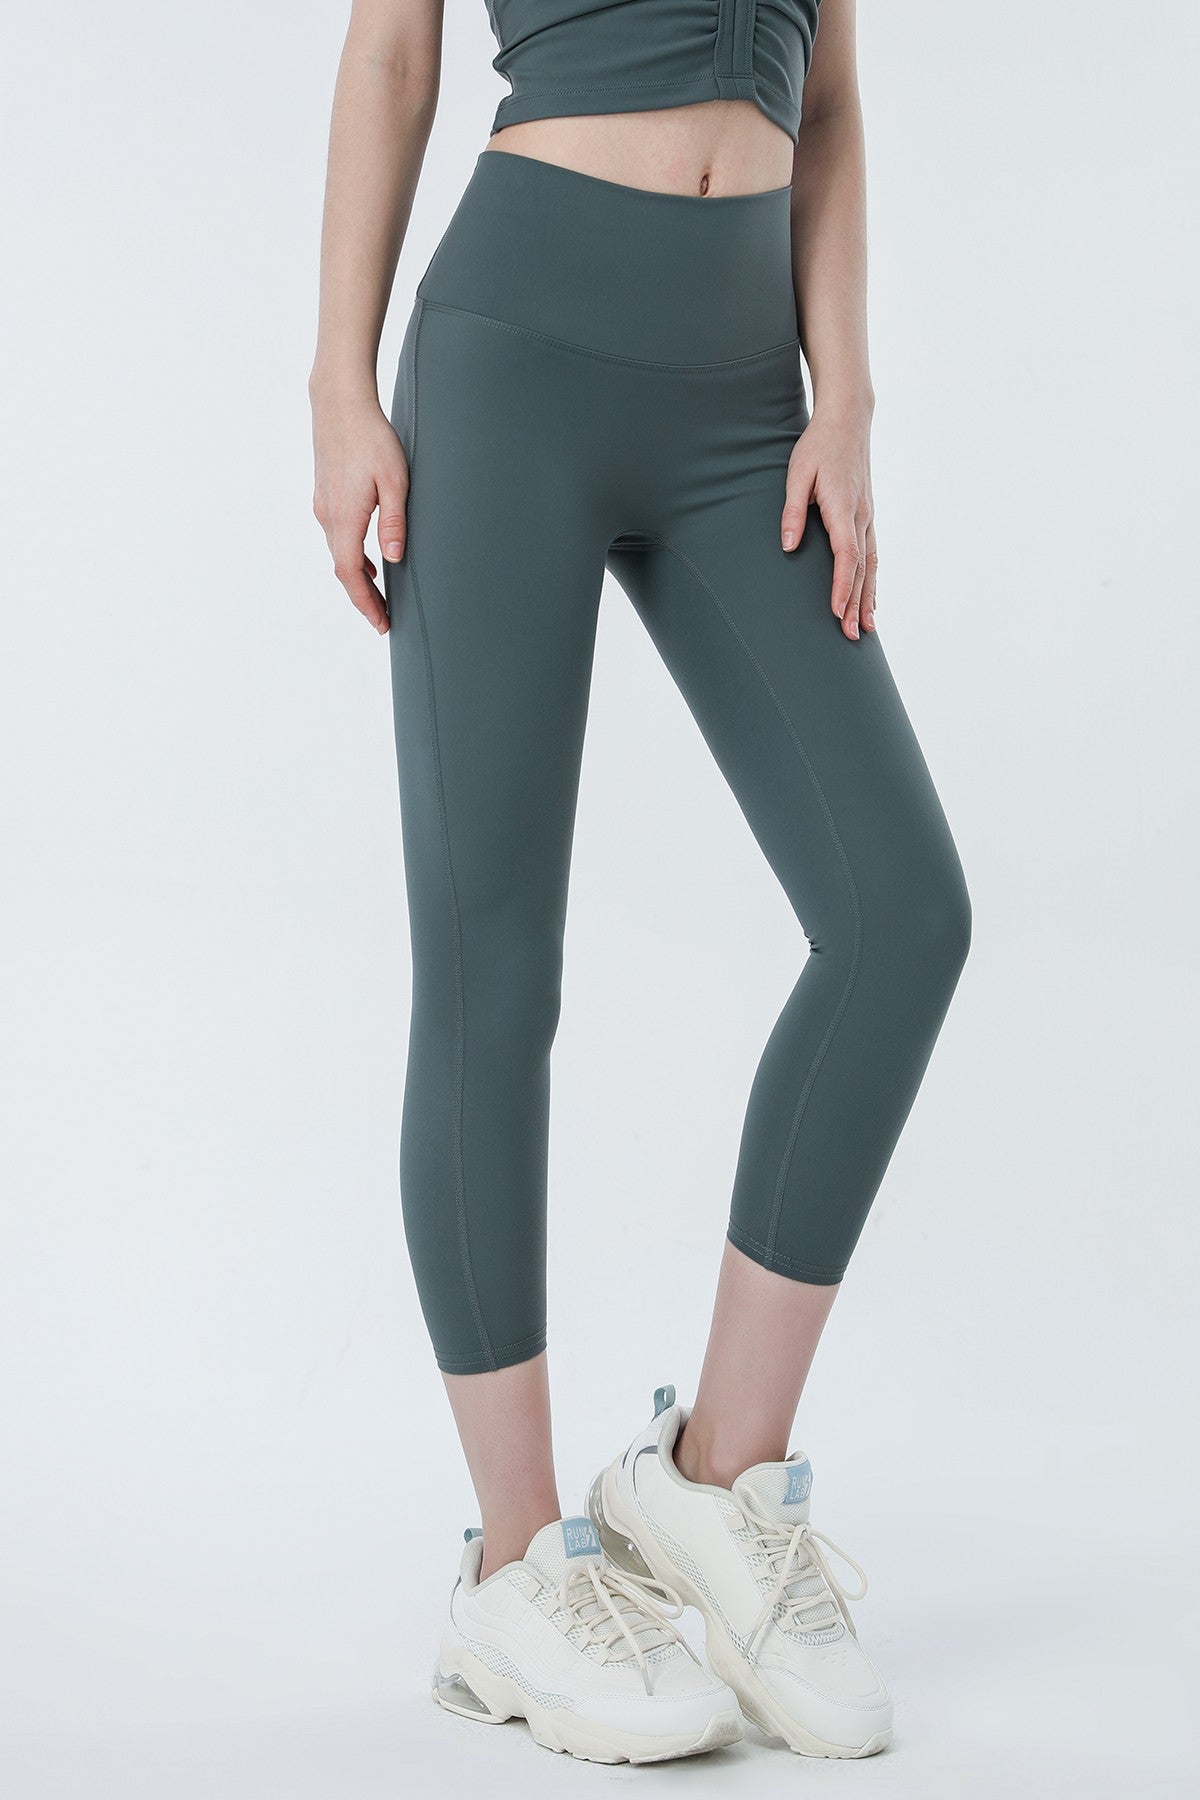 Seamless Capri Yoga Pants - High-Waisted Cropped Workout Leggings